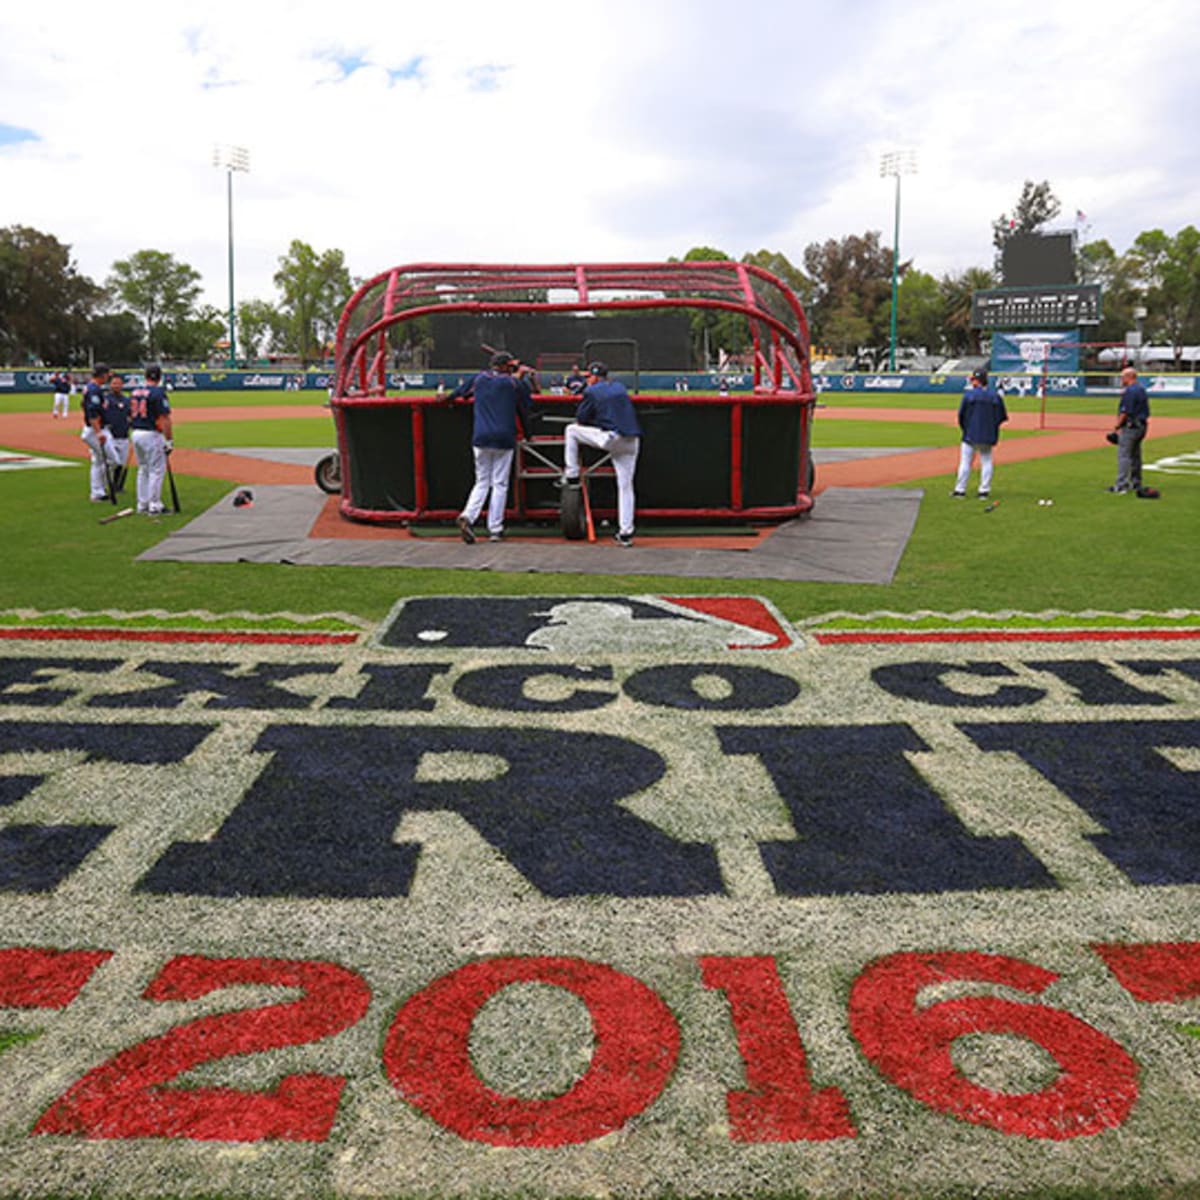 San Antonio Armadillos MLB Expansion by Michael Danger on Dribbble